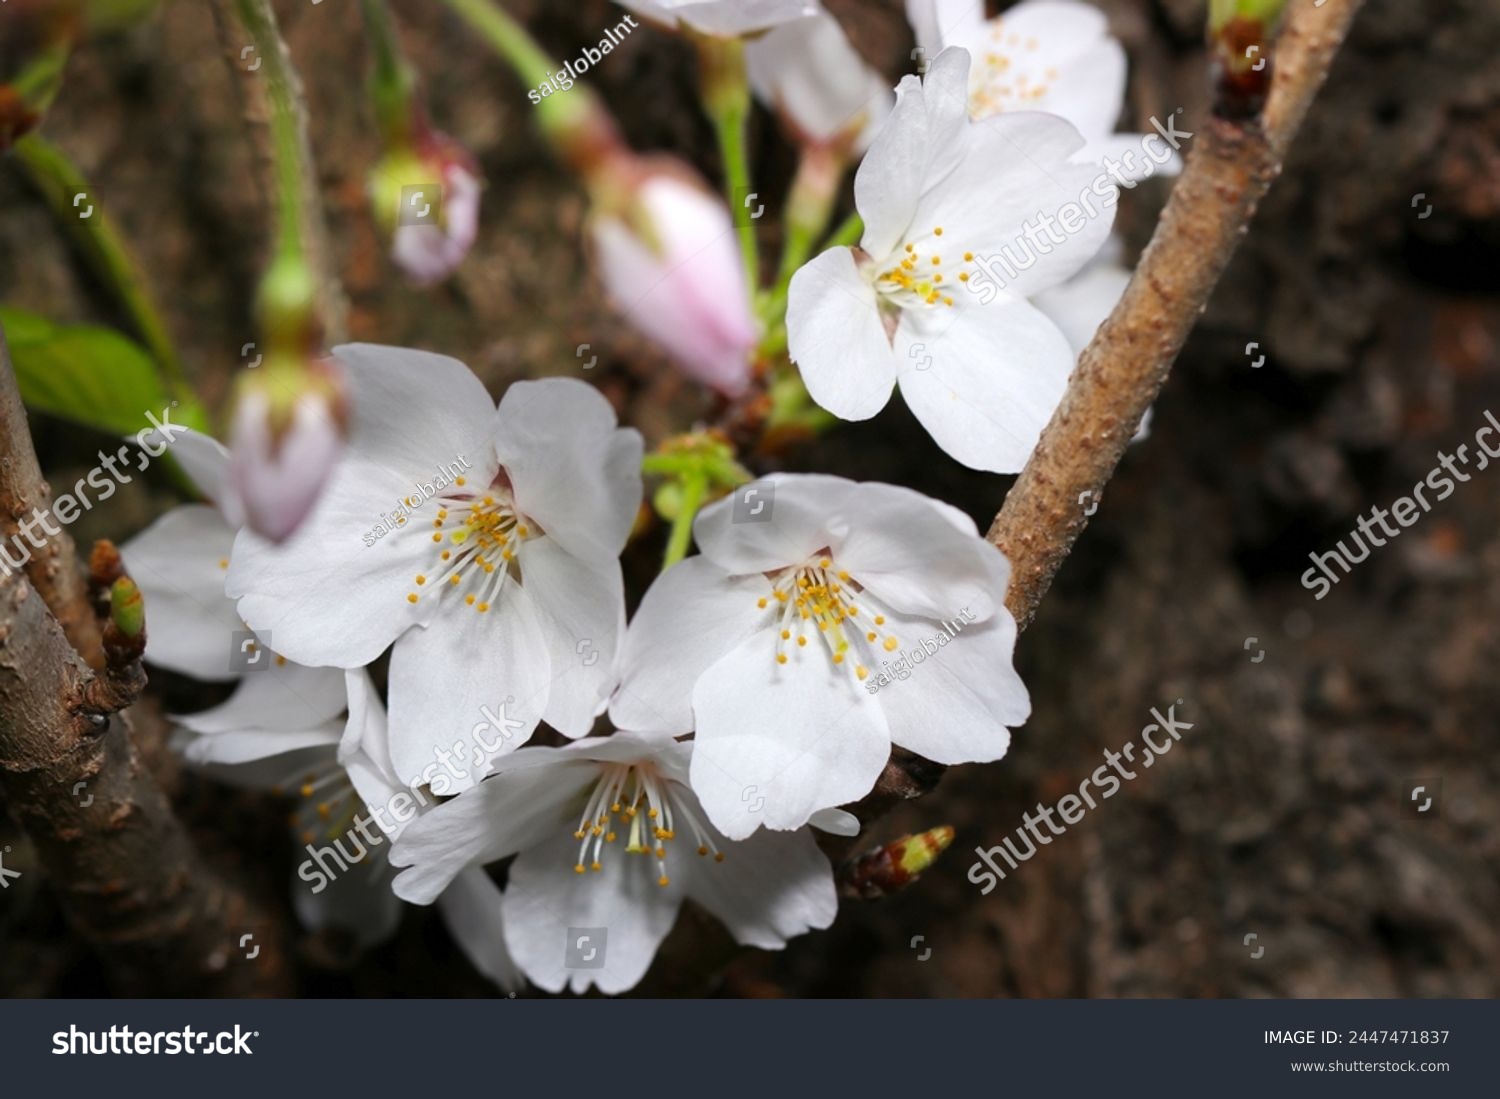 Someiyoshino cherry blossom full blooming flower branch (Natural+flash light, macro close-up photography) #2447471837